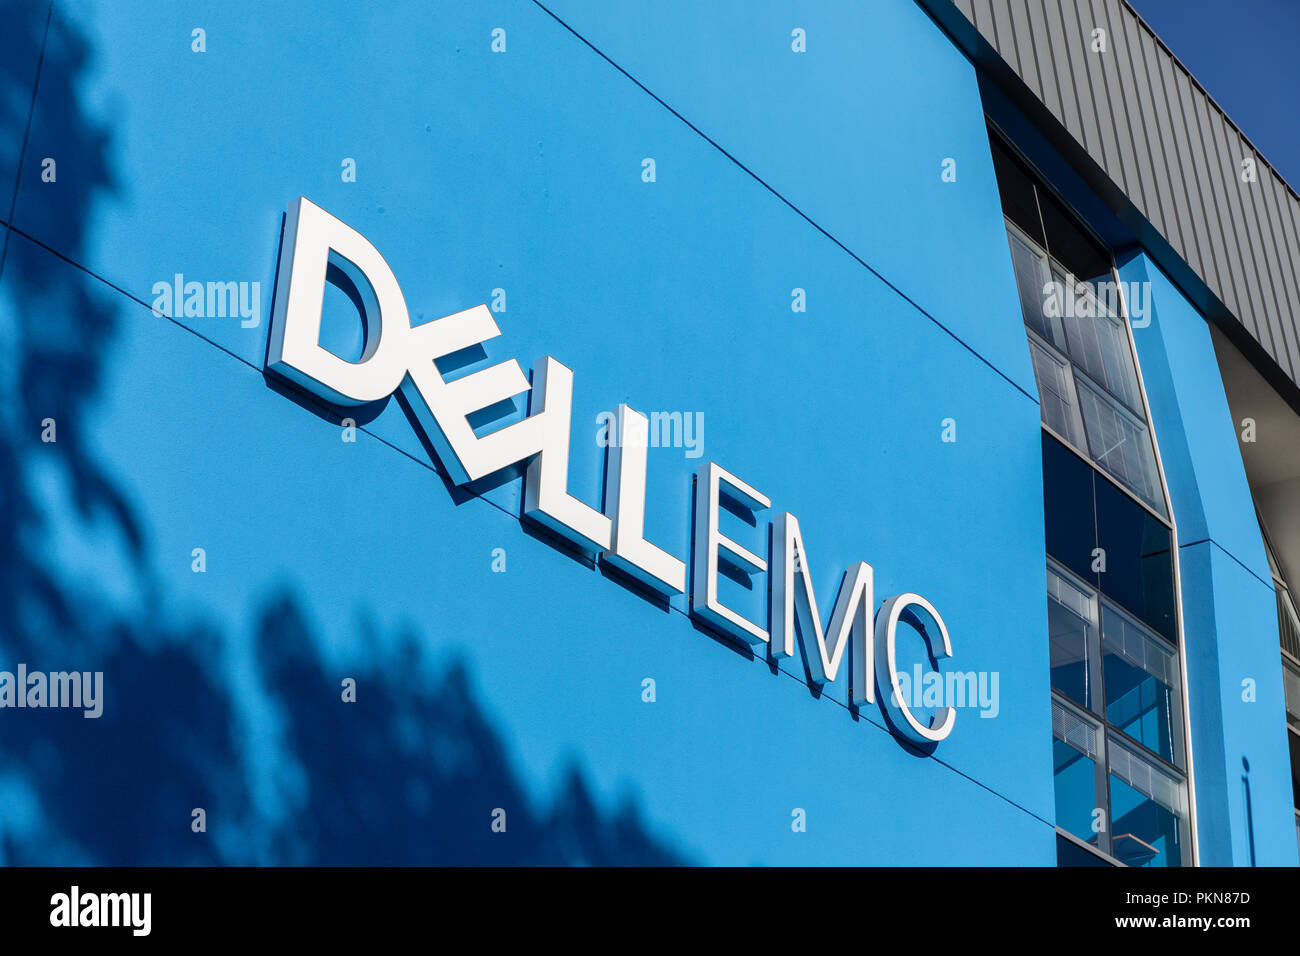 Dell EMC, Great America Parkway, Santa Clara, California, USA Stock Photo